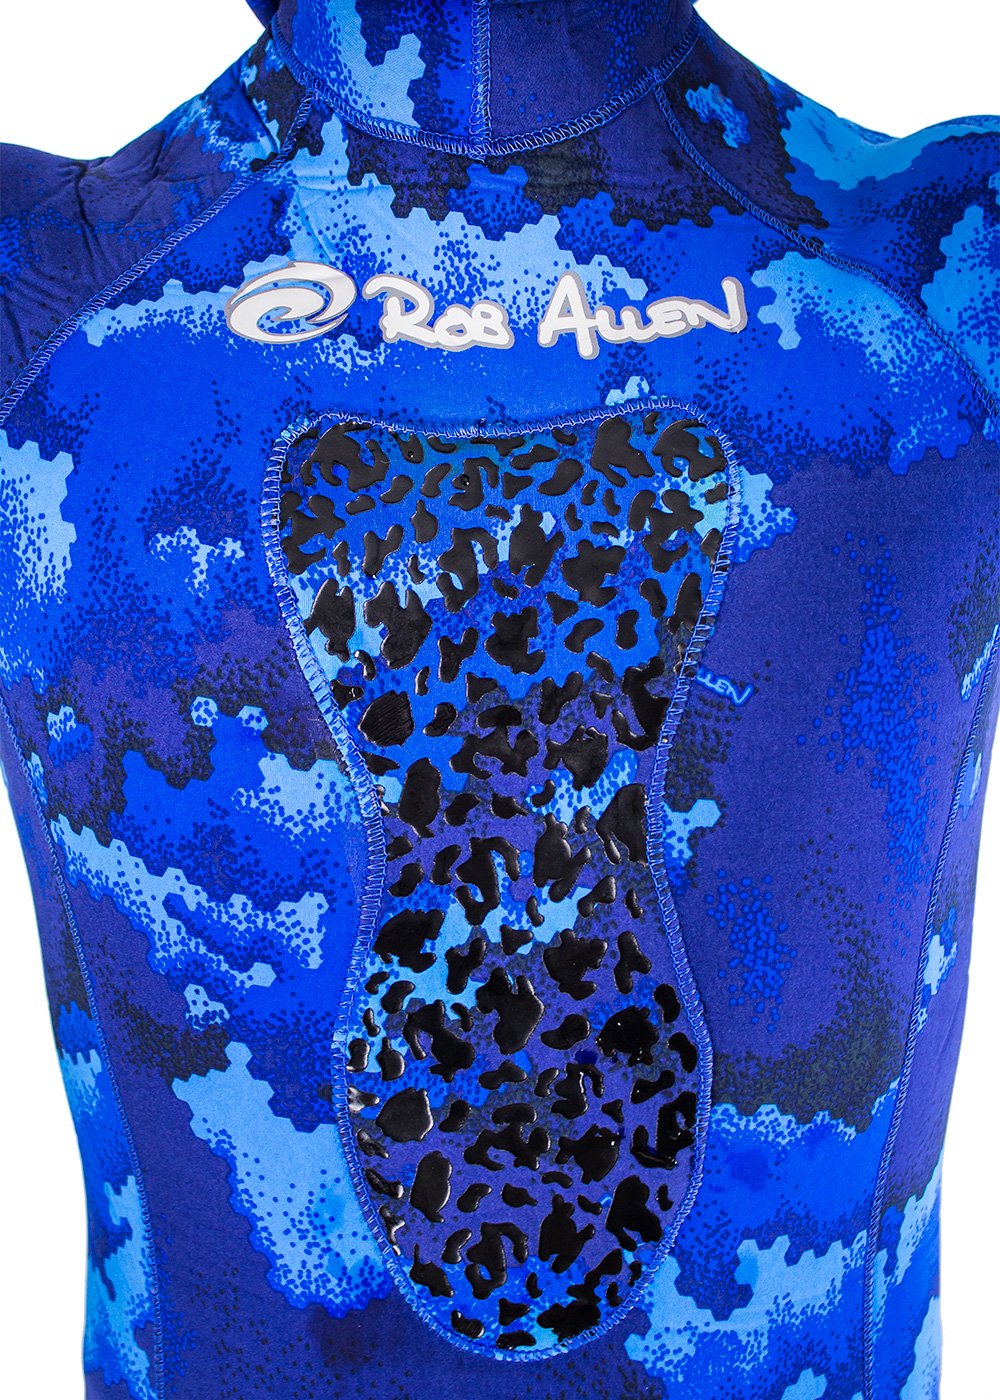 Rob Allen 2mm Digital Bluewater Camo Wetsuit